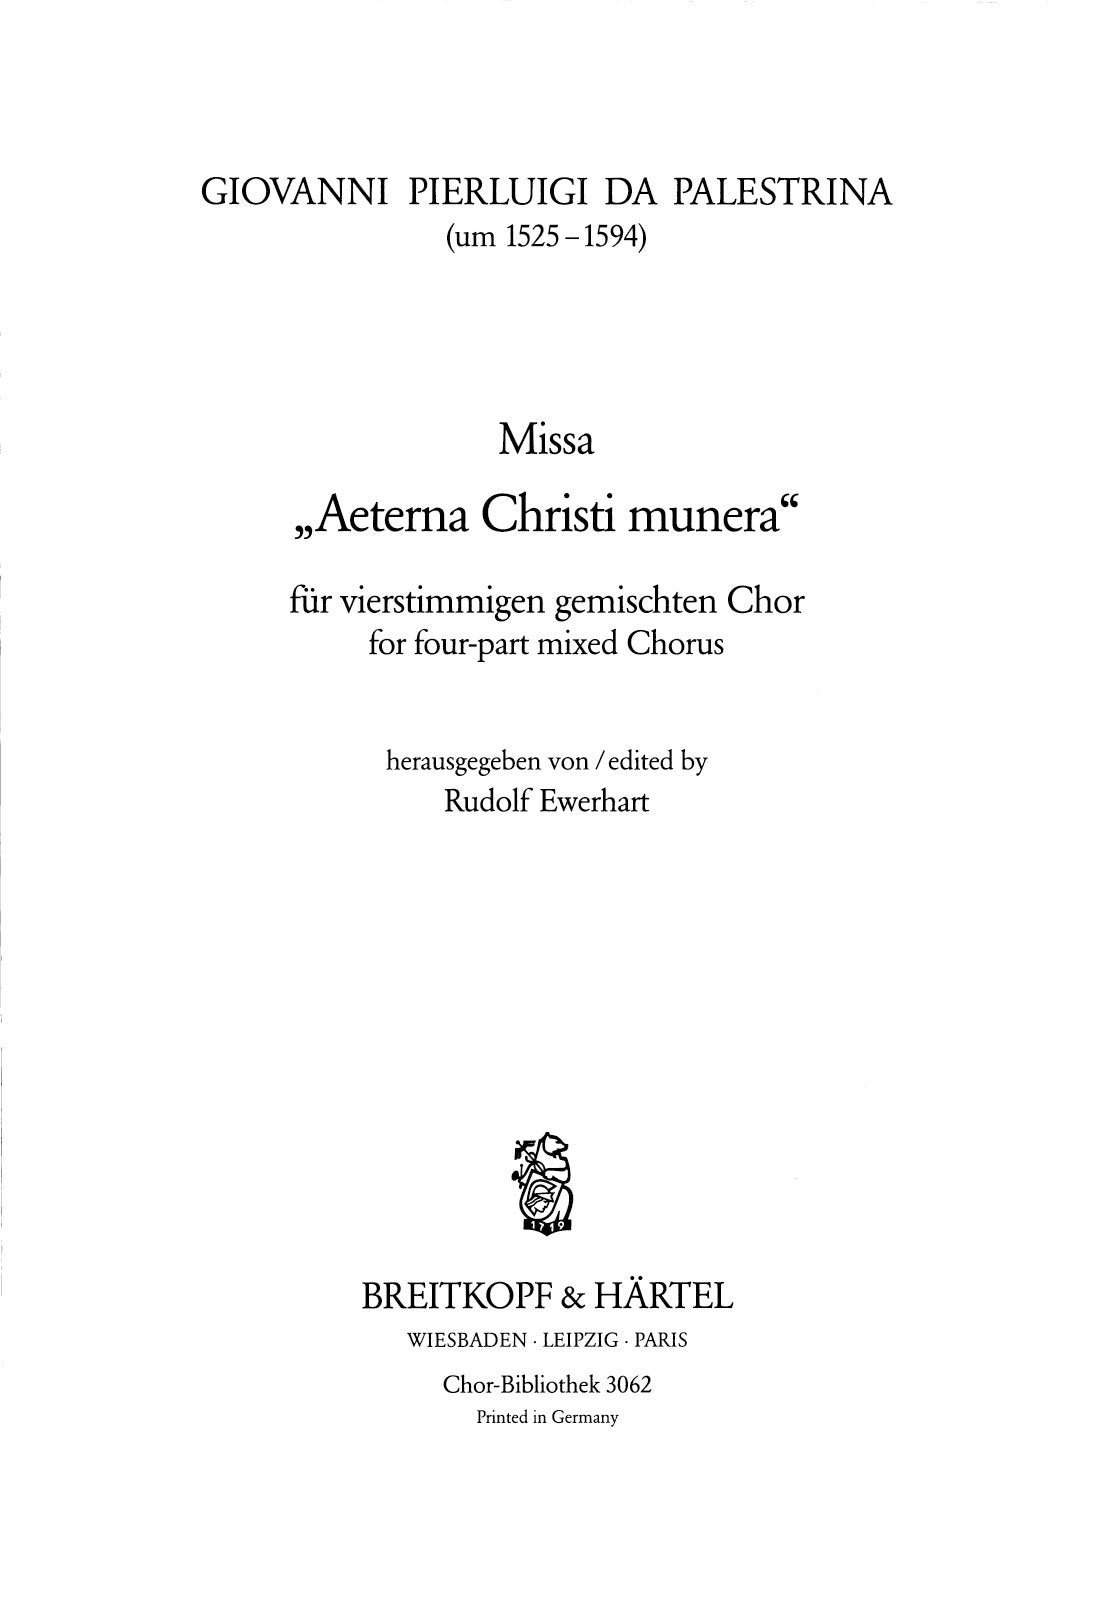 Palestrina: Missa "Aeterna Christi munera"